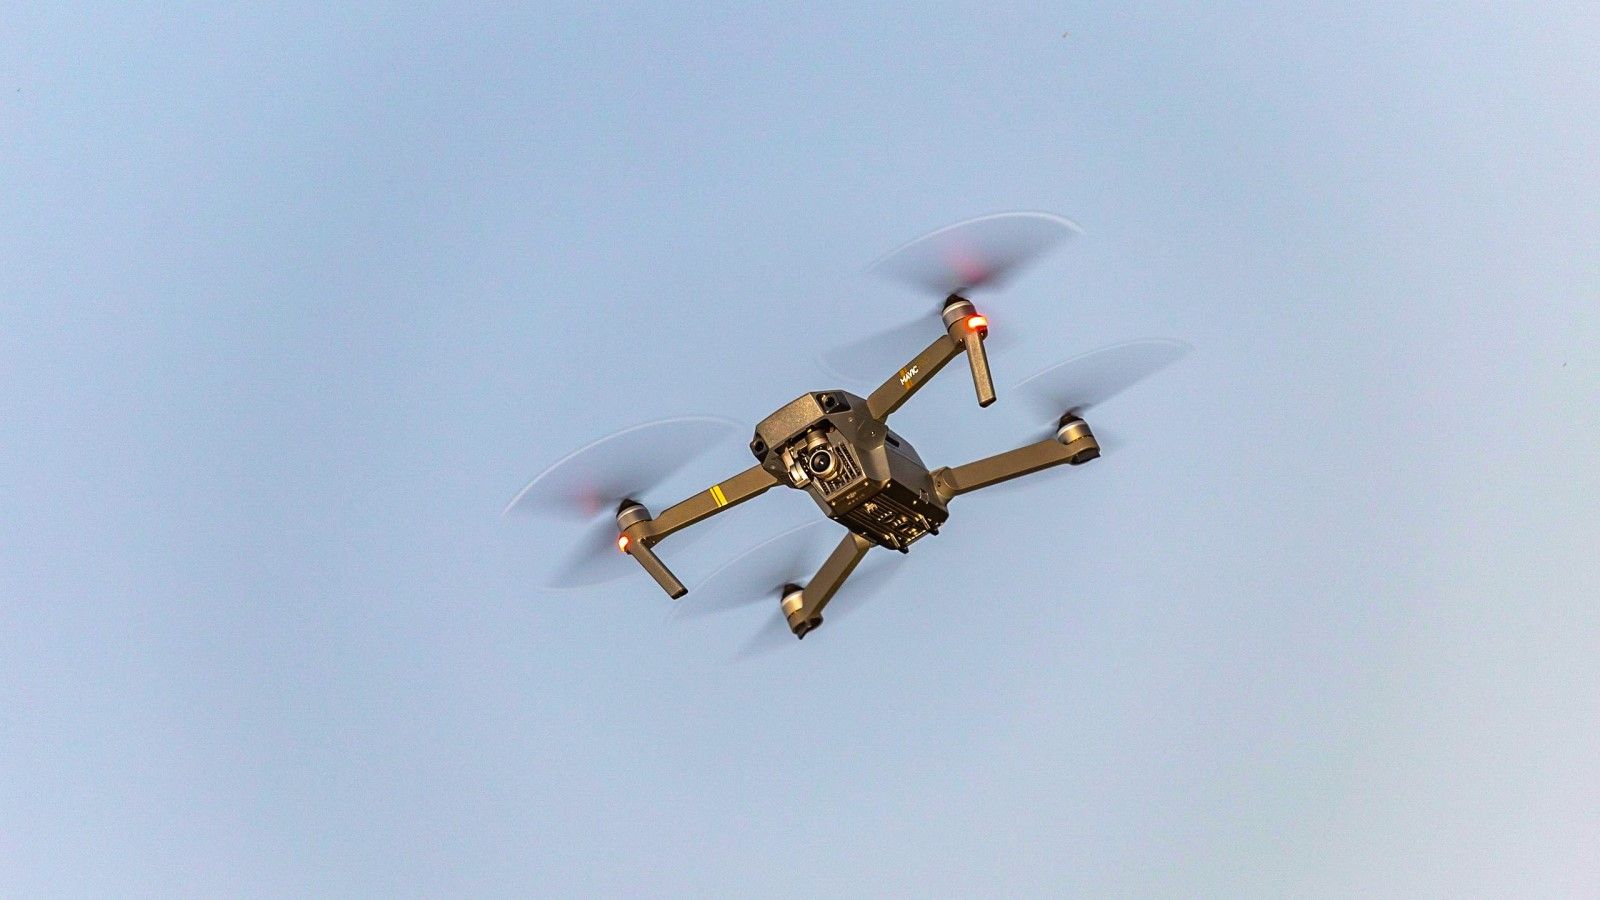 Flying of UAV - Drones | Pukaki Airport